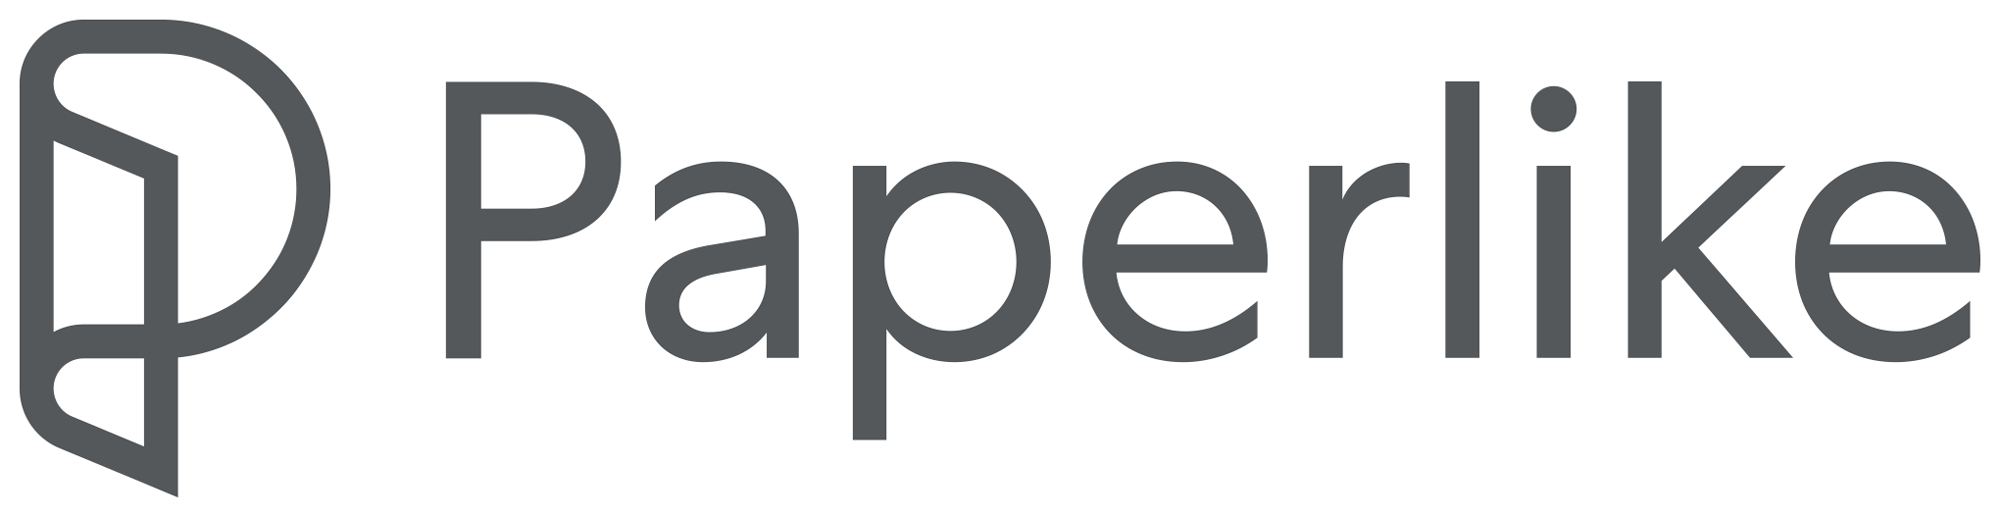 New Logo and Packaging for Paperlike by Daniel Flösser